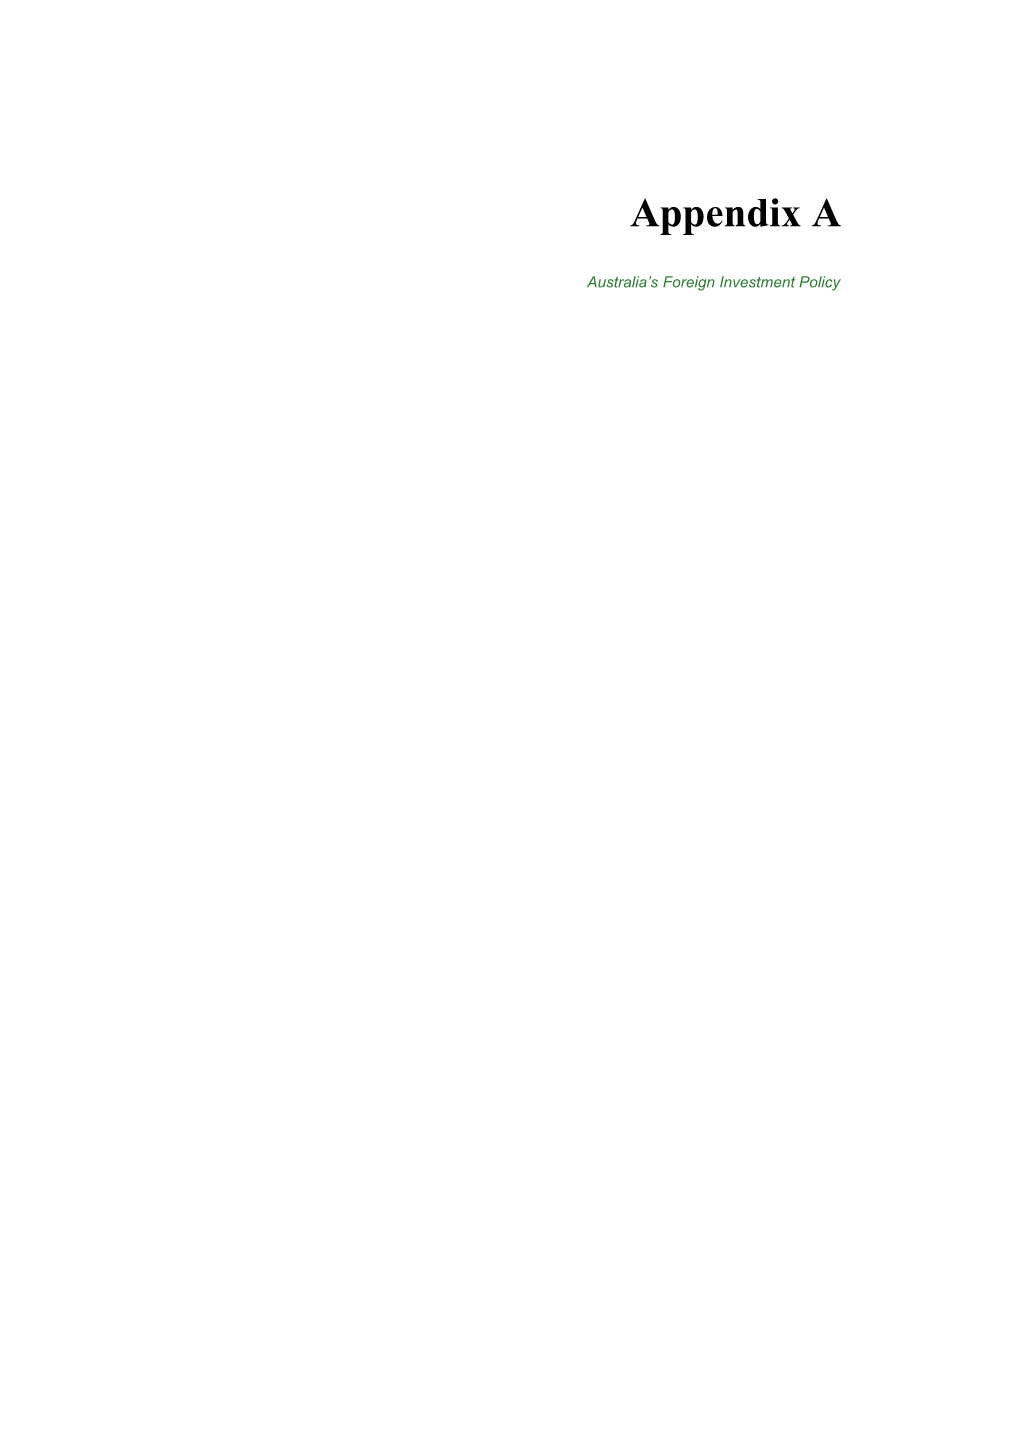 Appendix a - FIRB 2007-08 Annual Report